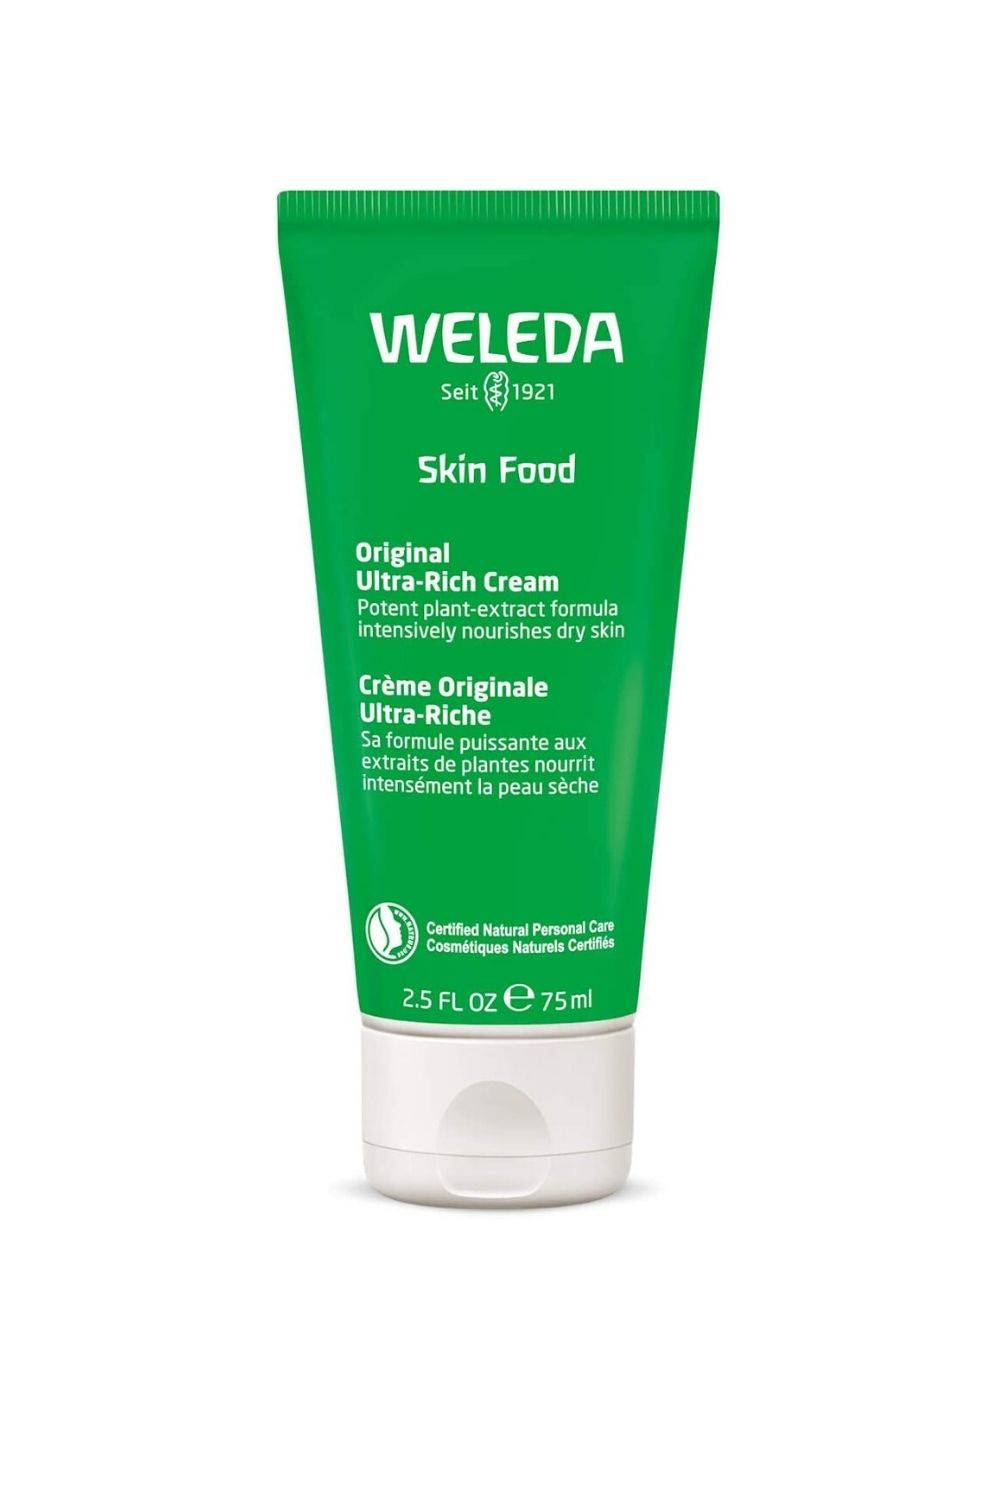 Ultra-Rich Cream de Weleda